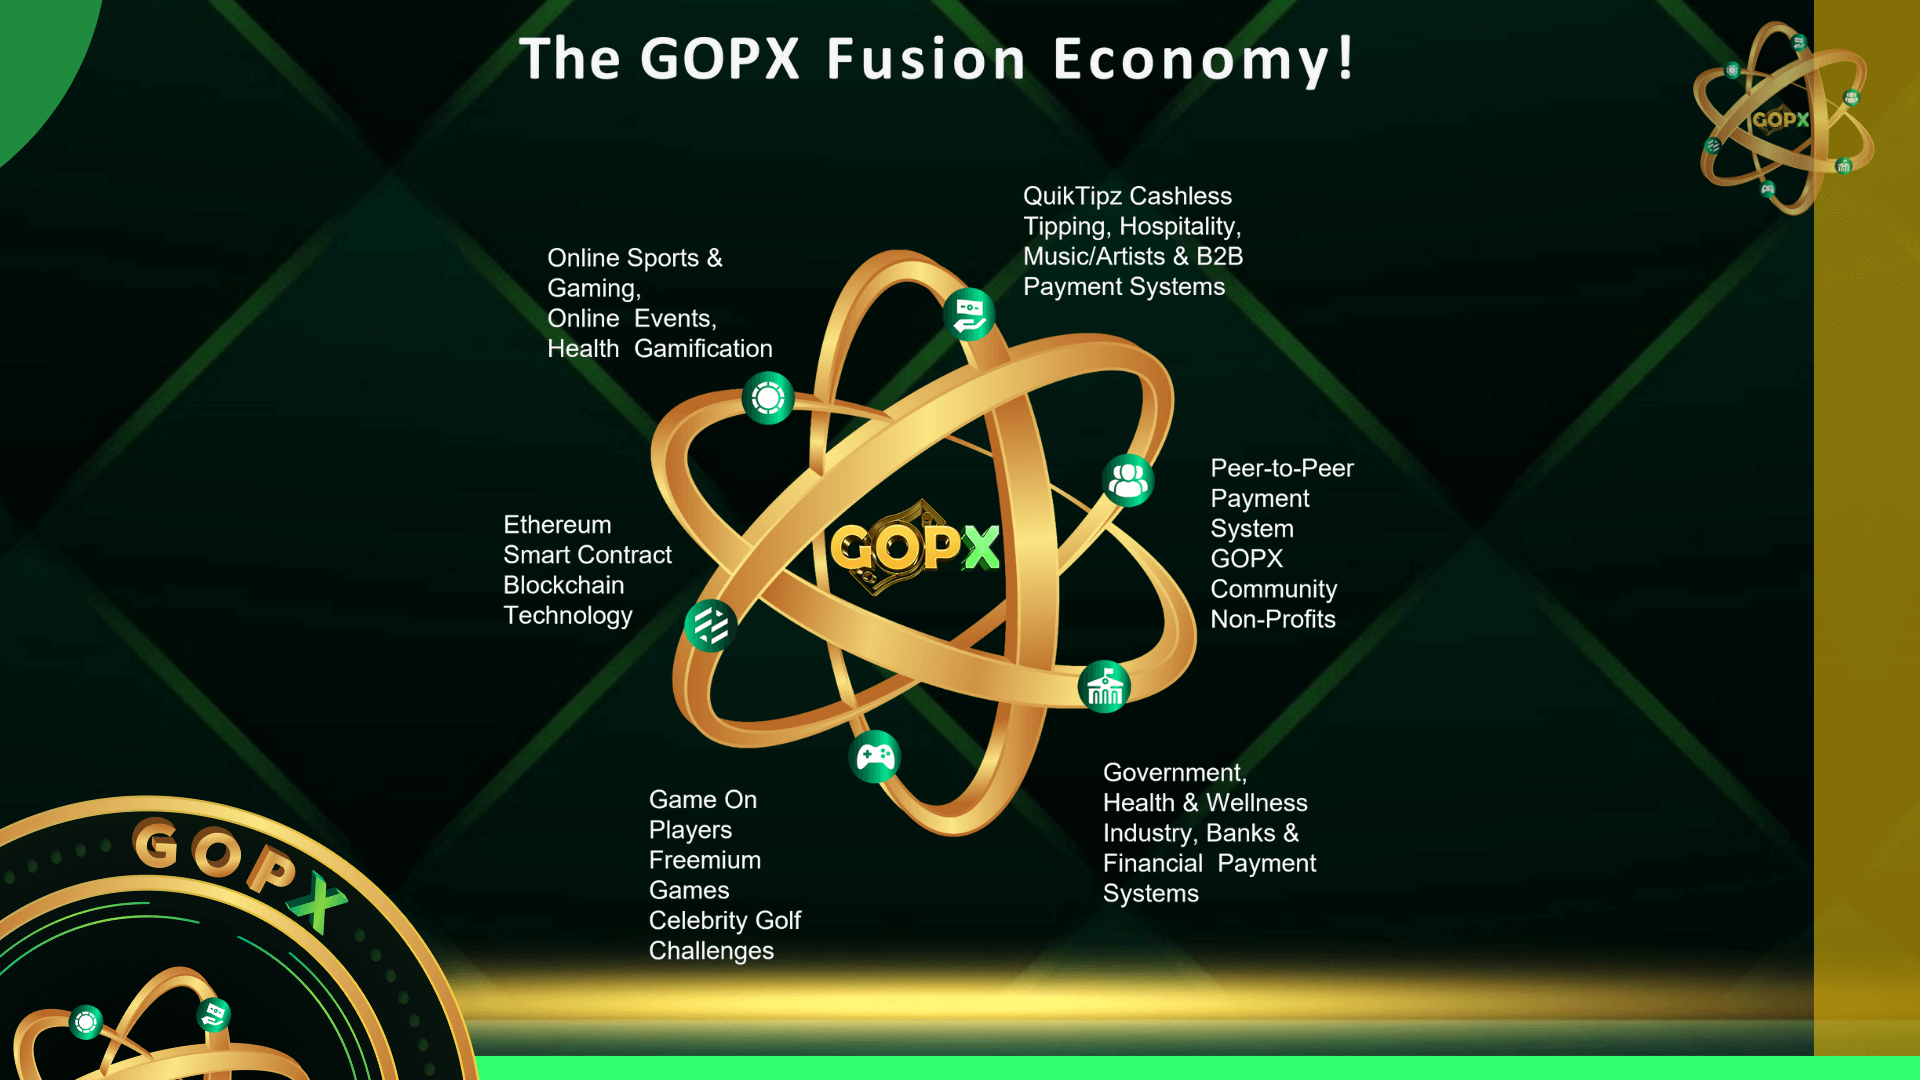  The GOPX Fusion Economy